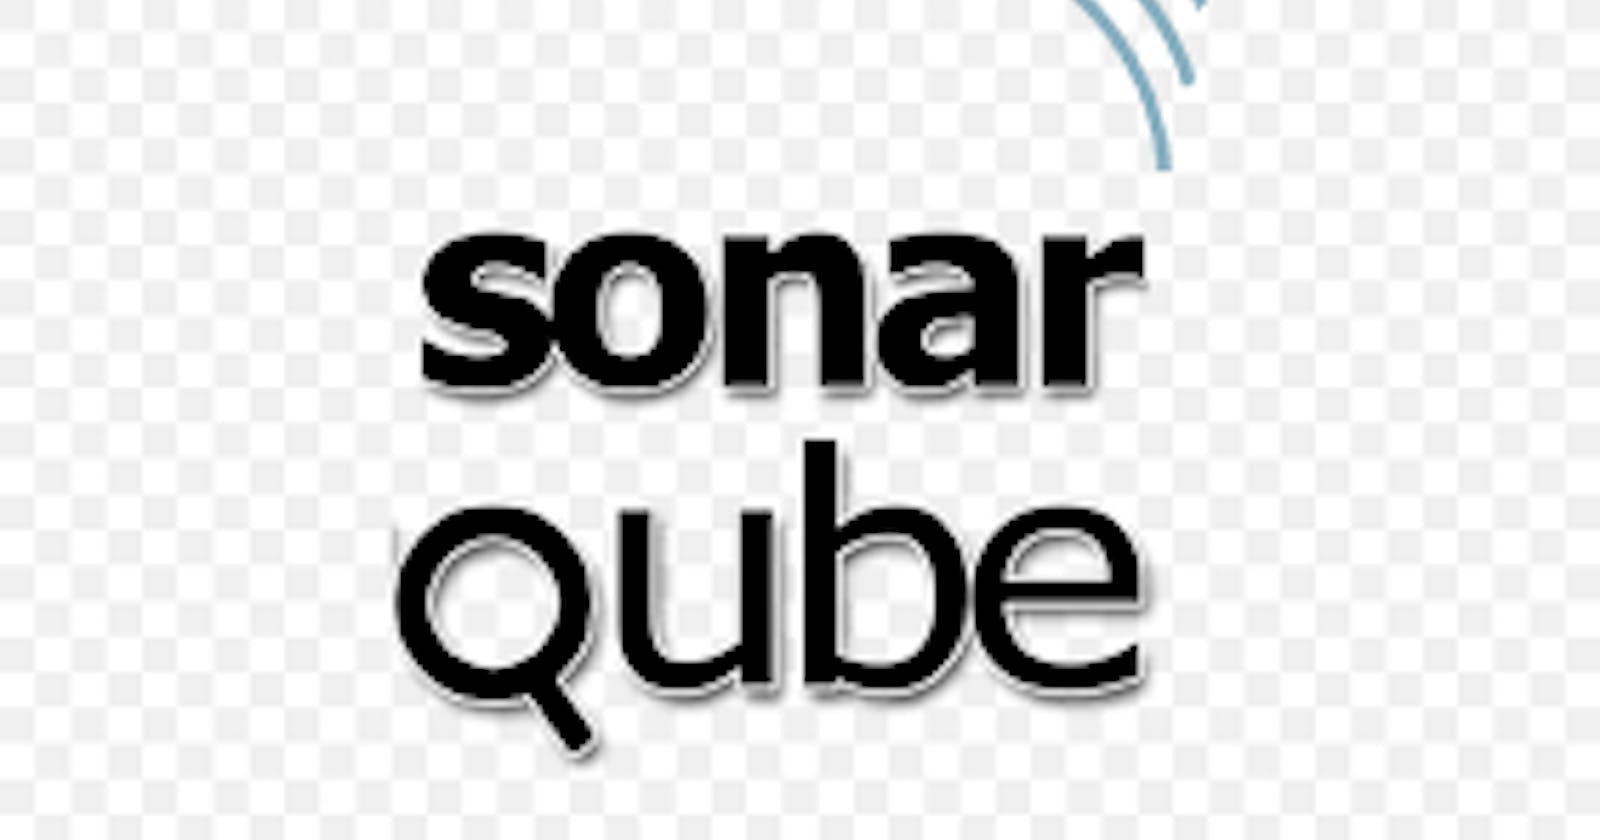 SonarQube